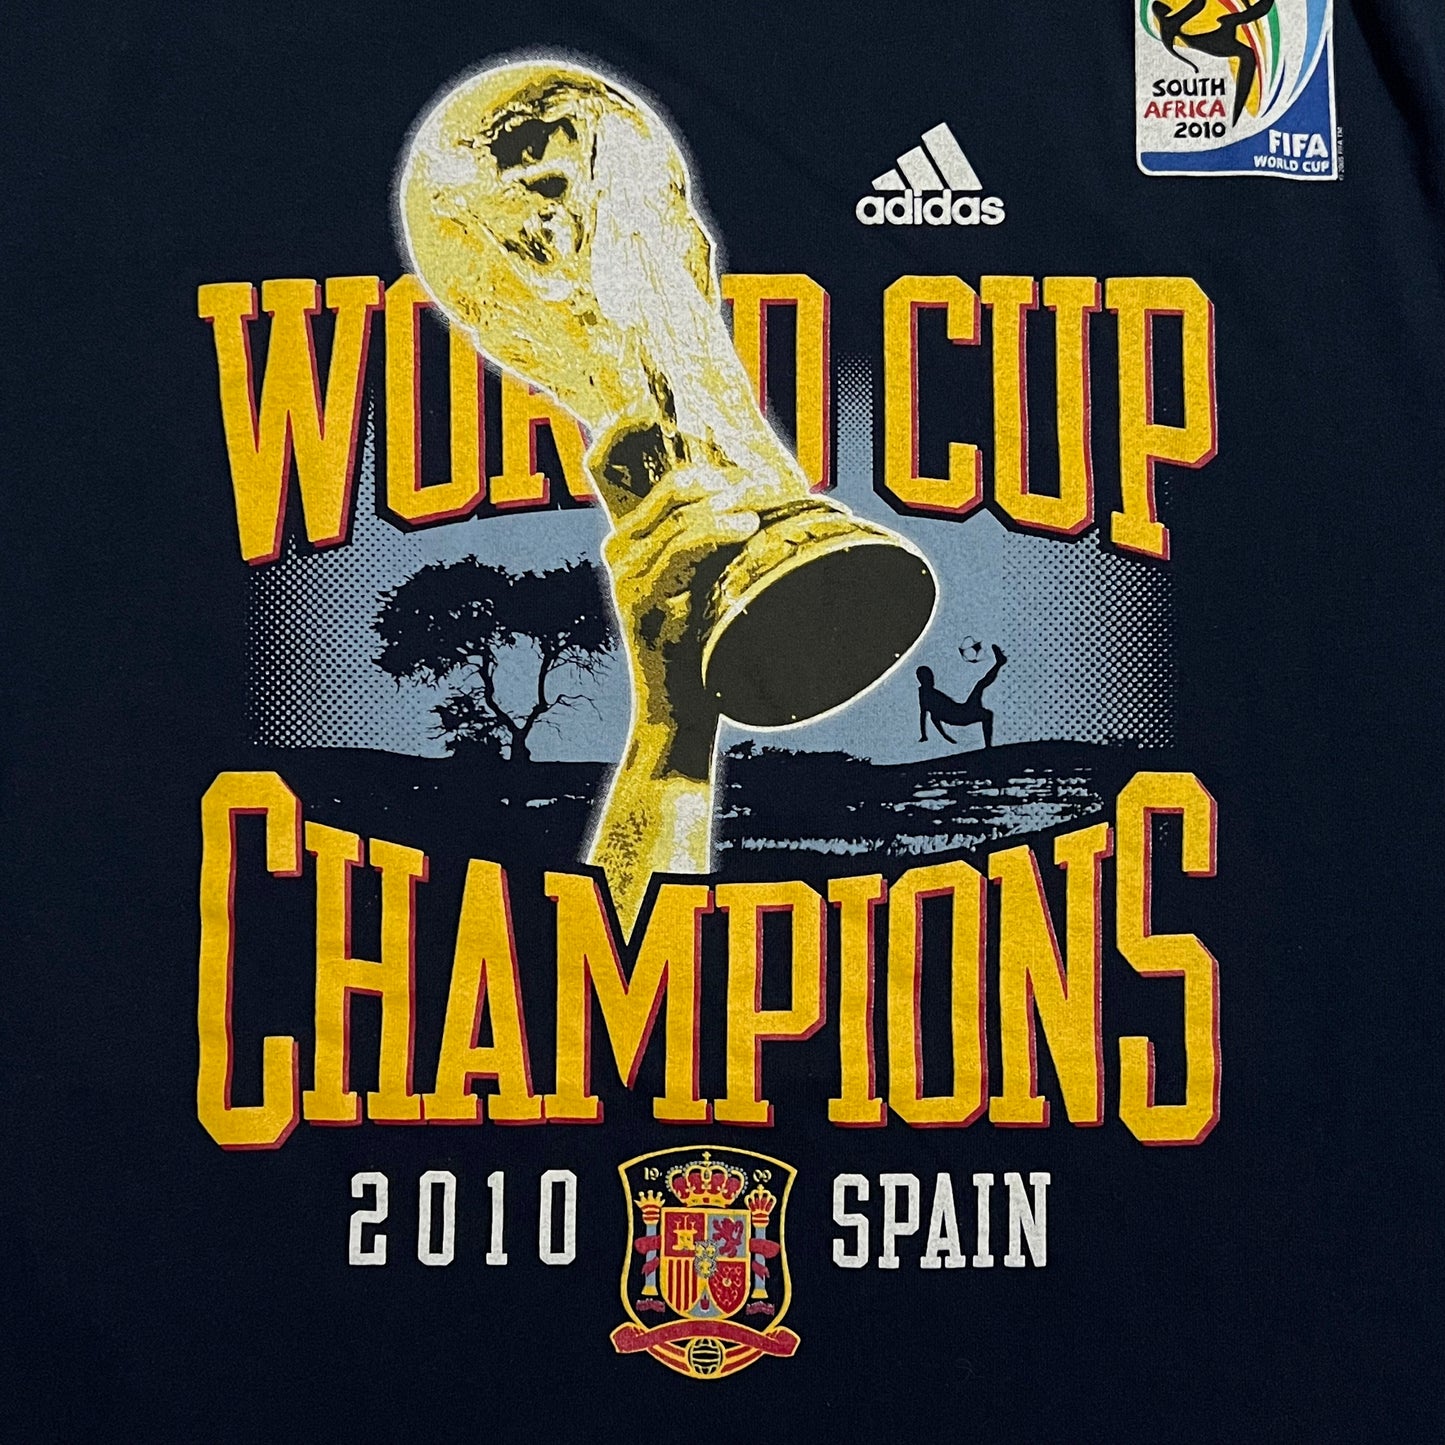 2010 Spain FIFA World Cup Champions Adidas Shirt - XL